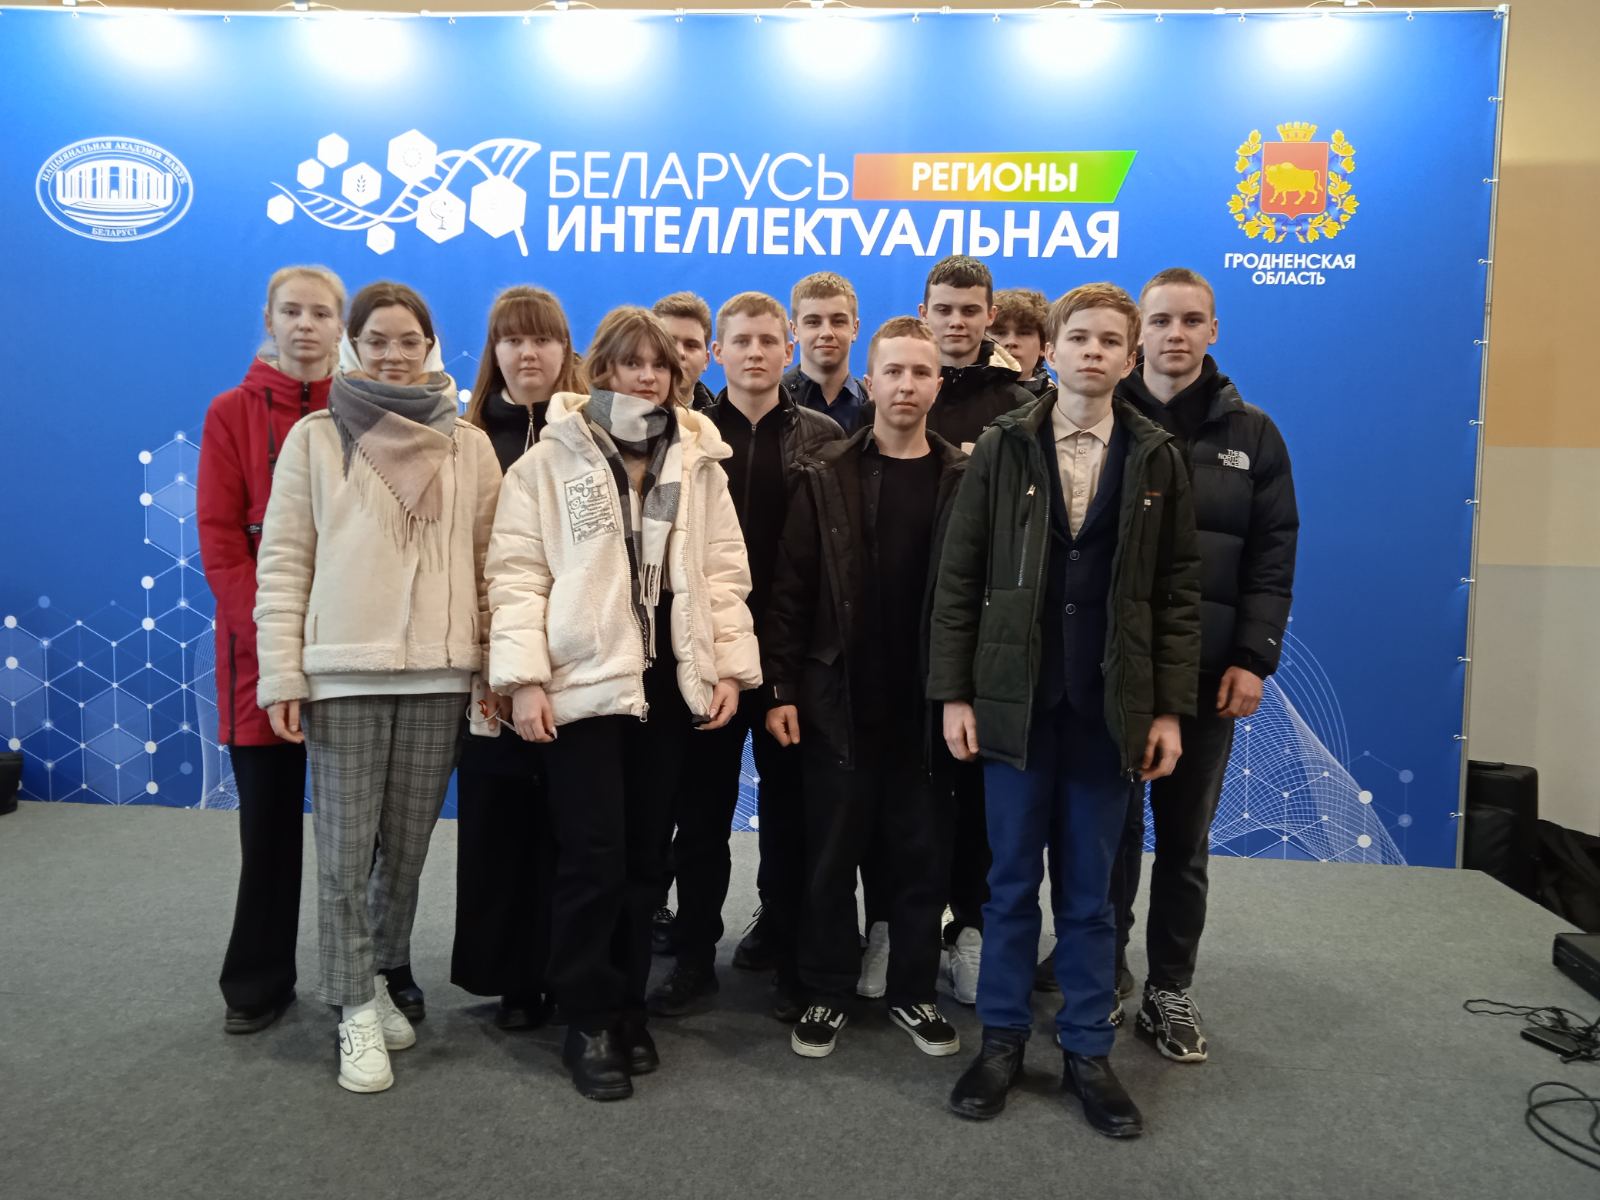 Экскурсия на выставку "Беларусь интеллектуальная"